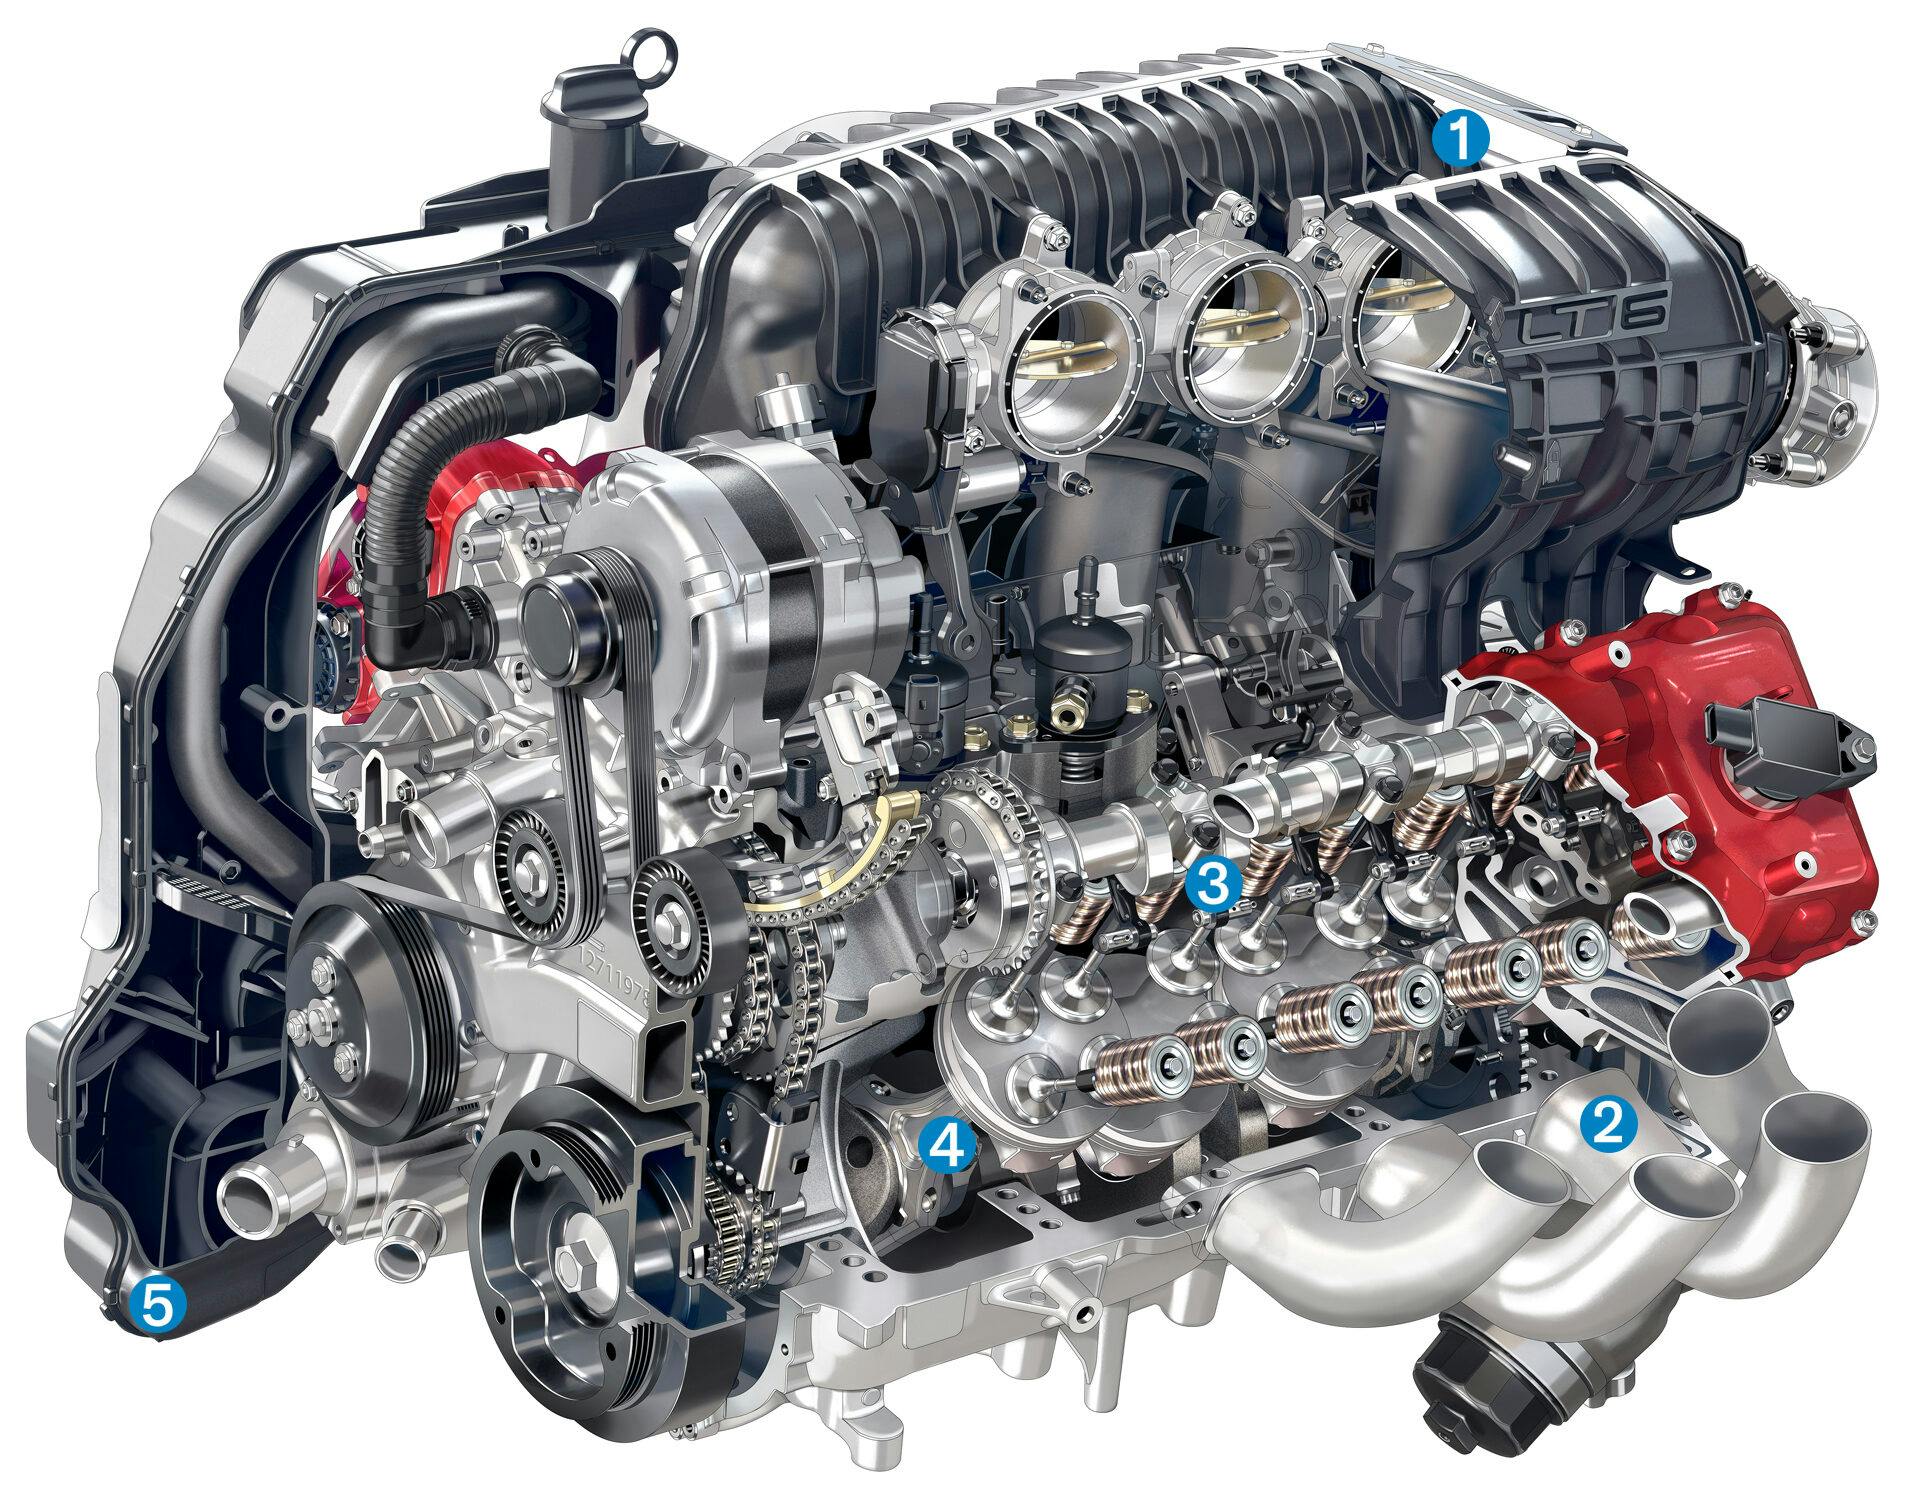 Chevrolet LT6 Corvette Engine Five Points of Interest Cutaway Illustration